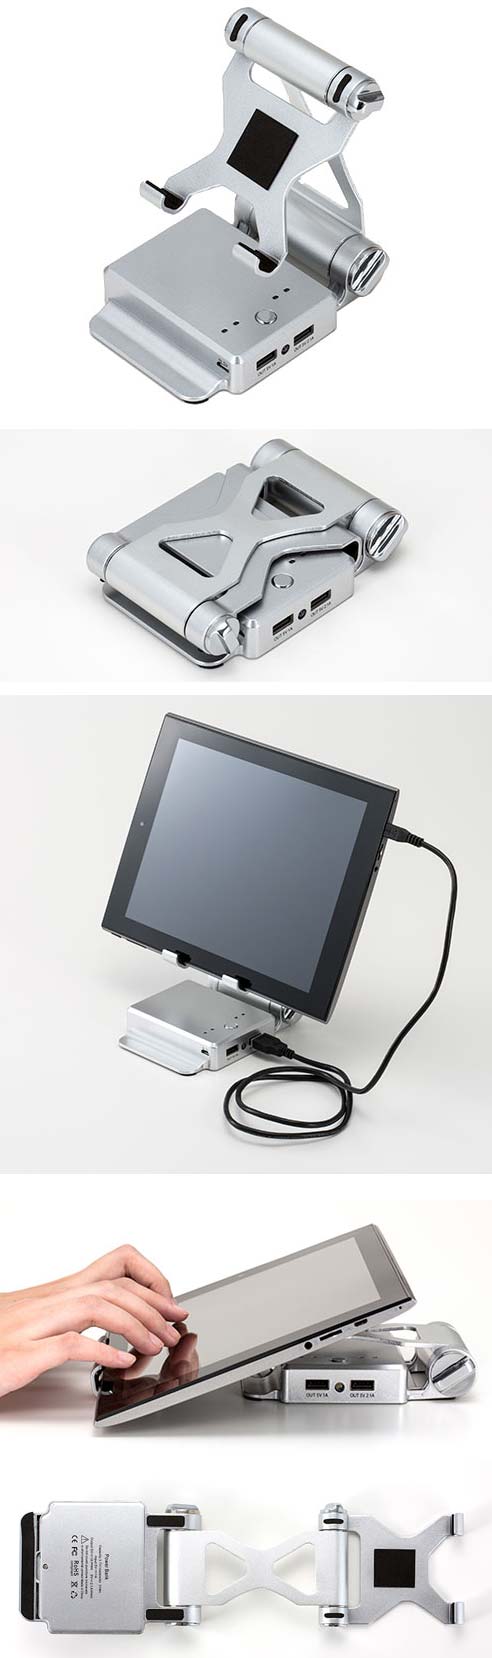 Tekwind Mobile USB Charging Stand